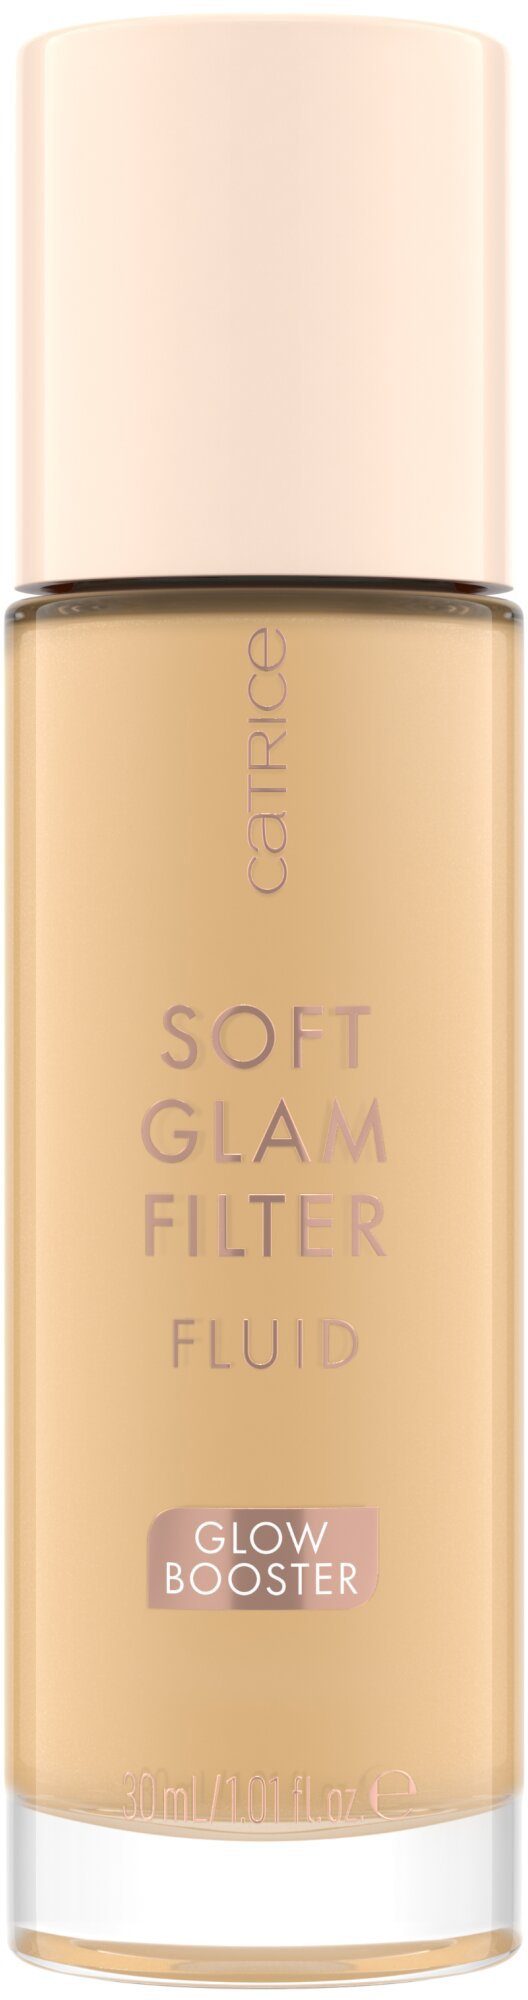 Glam Primer Filter Catrice Fluid Soft